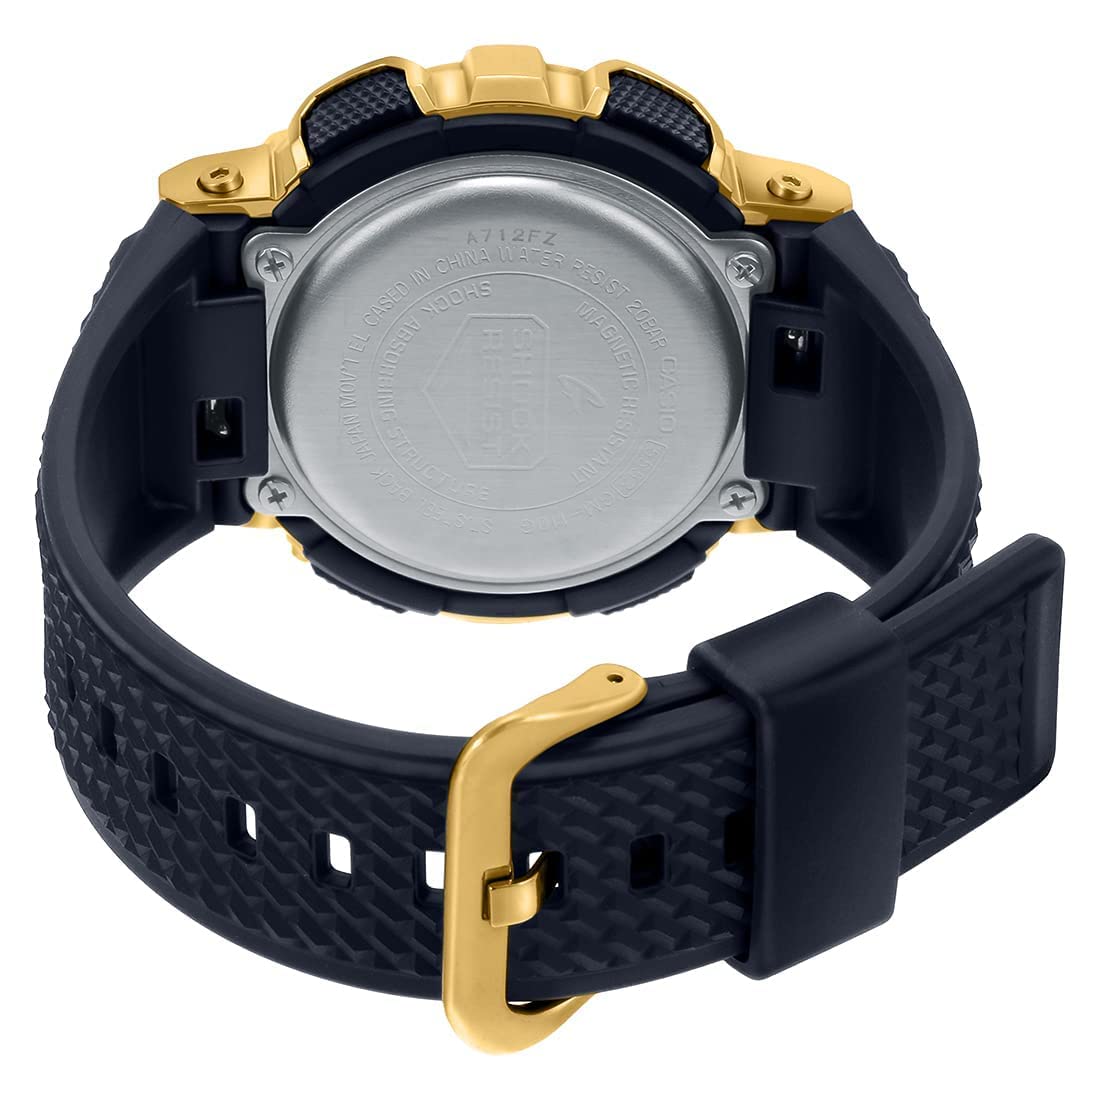 Casio G Shock Gm Metal Face Men's Digital-Analog Wrist Watch